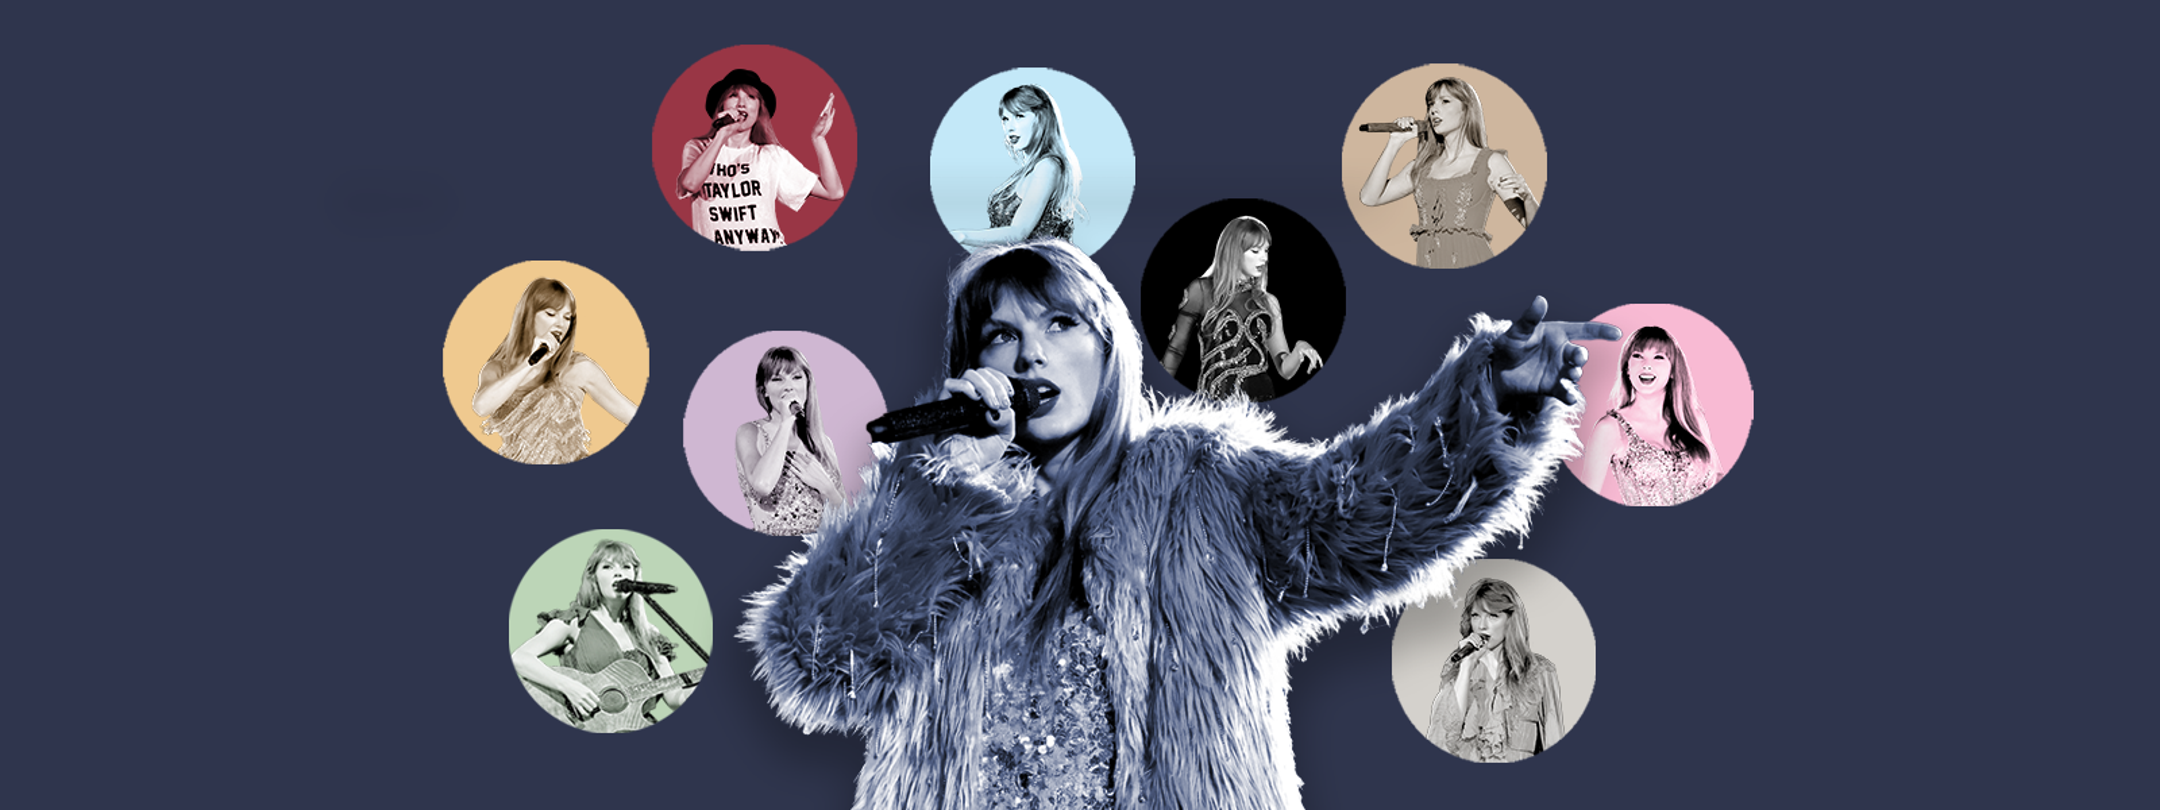 Taylor Swift's 10 studio albums, ranked